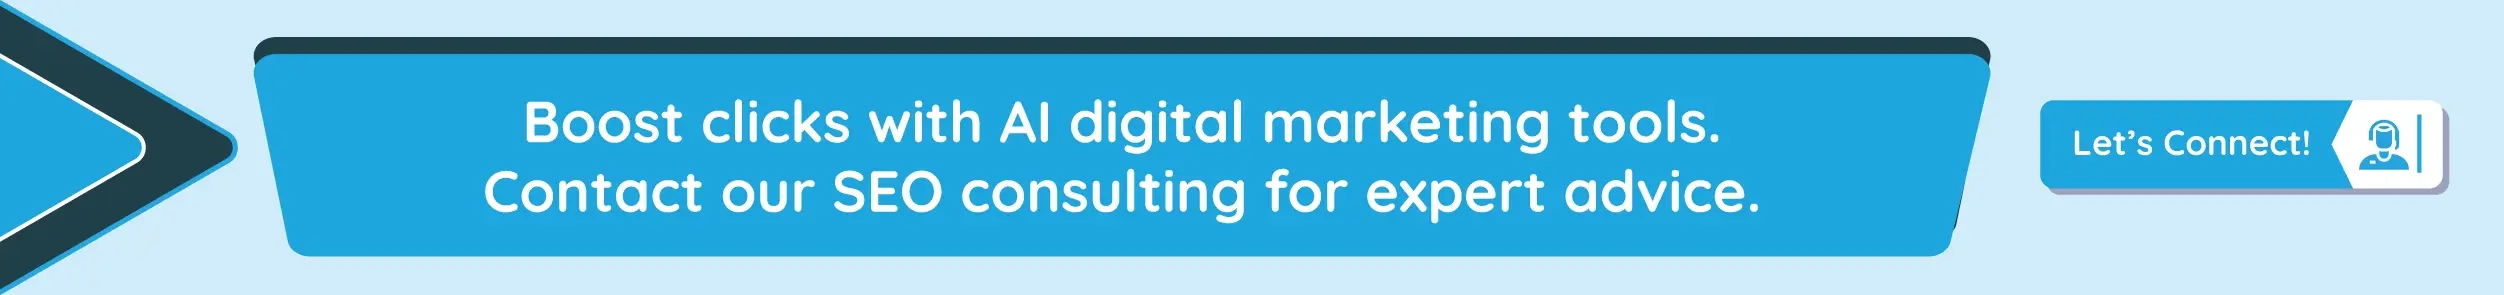 ai tools for digital marketing